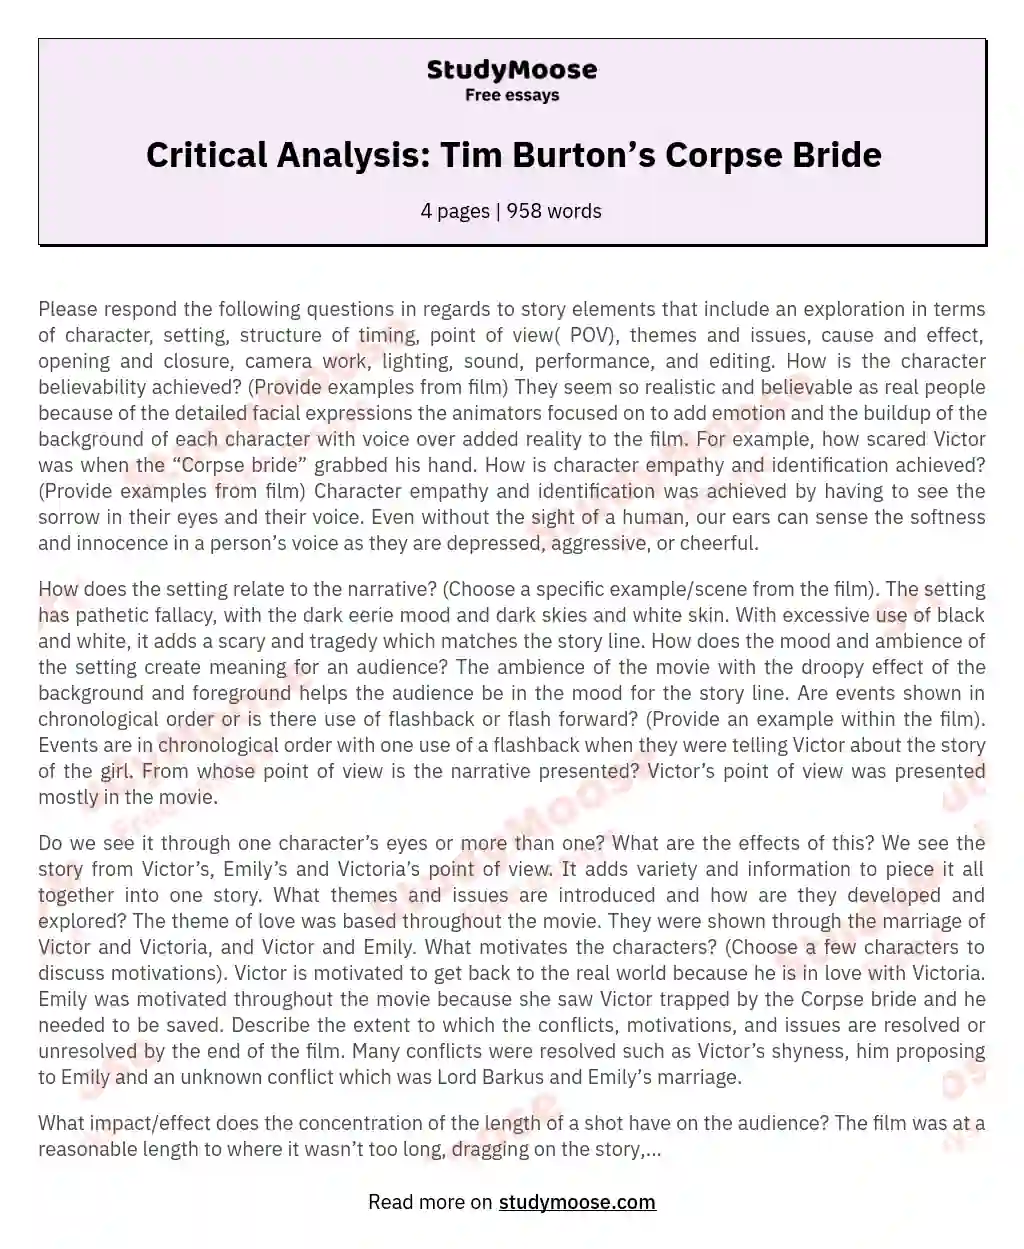 Critical Analysis: Tim Burton’s Corpse Bride